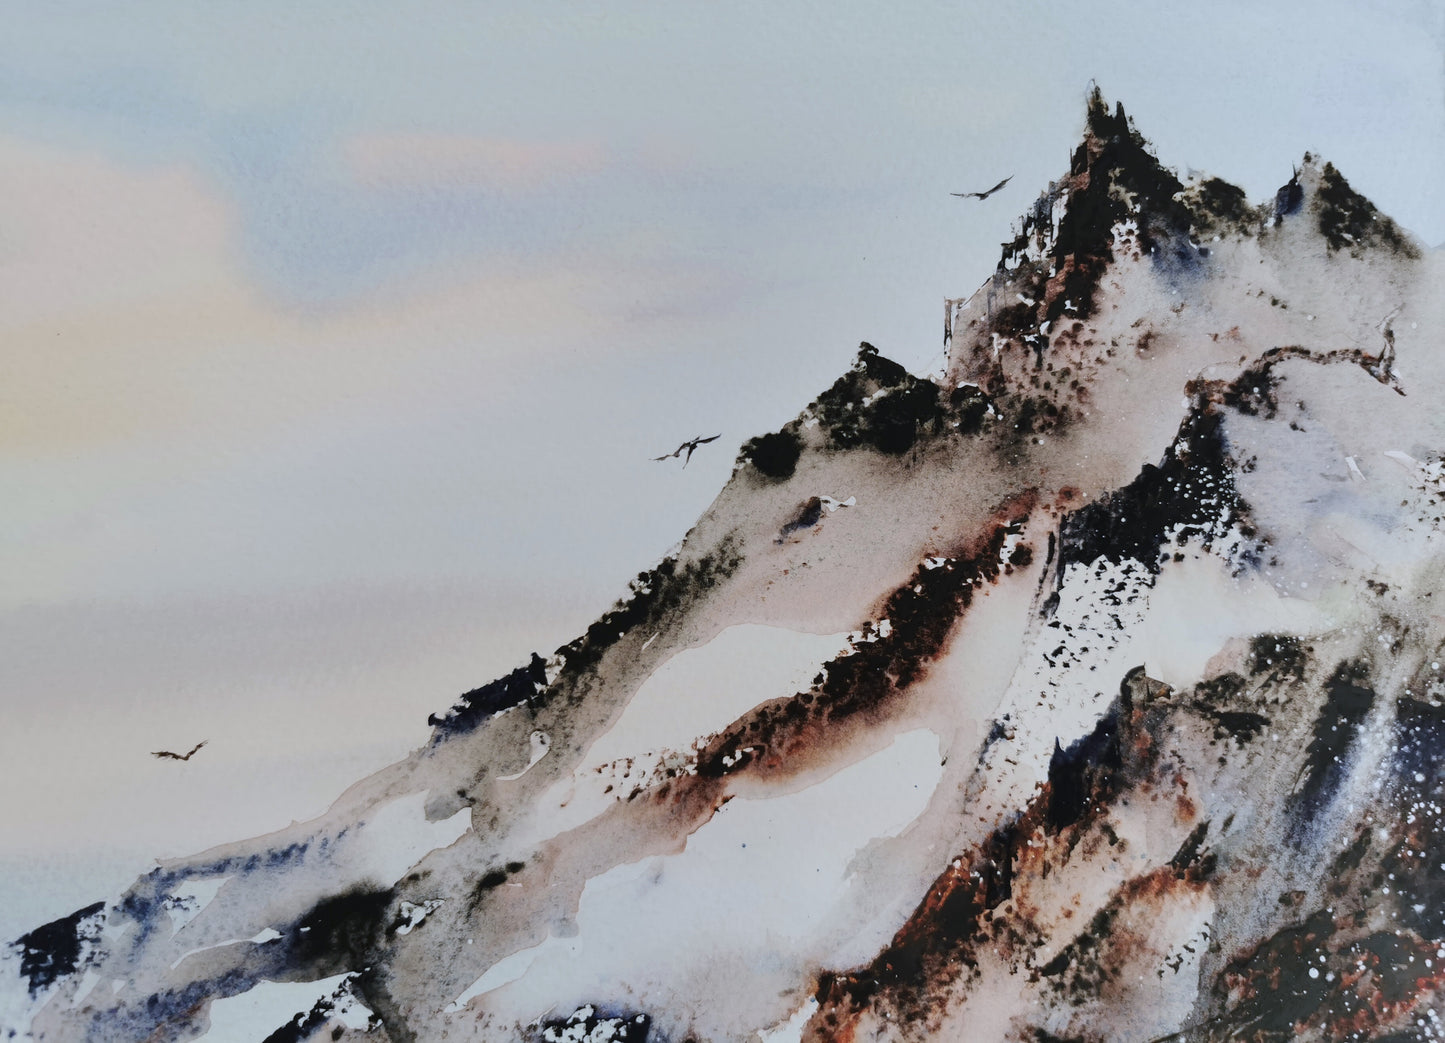 Mountains Painting Original Watercolor Art, Snowy Landscape Artwork, Alps Mountain, Nature Wall Decor